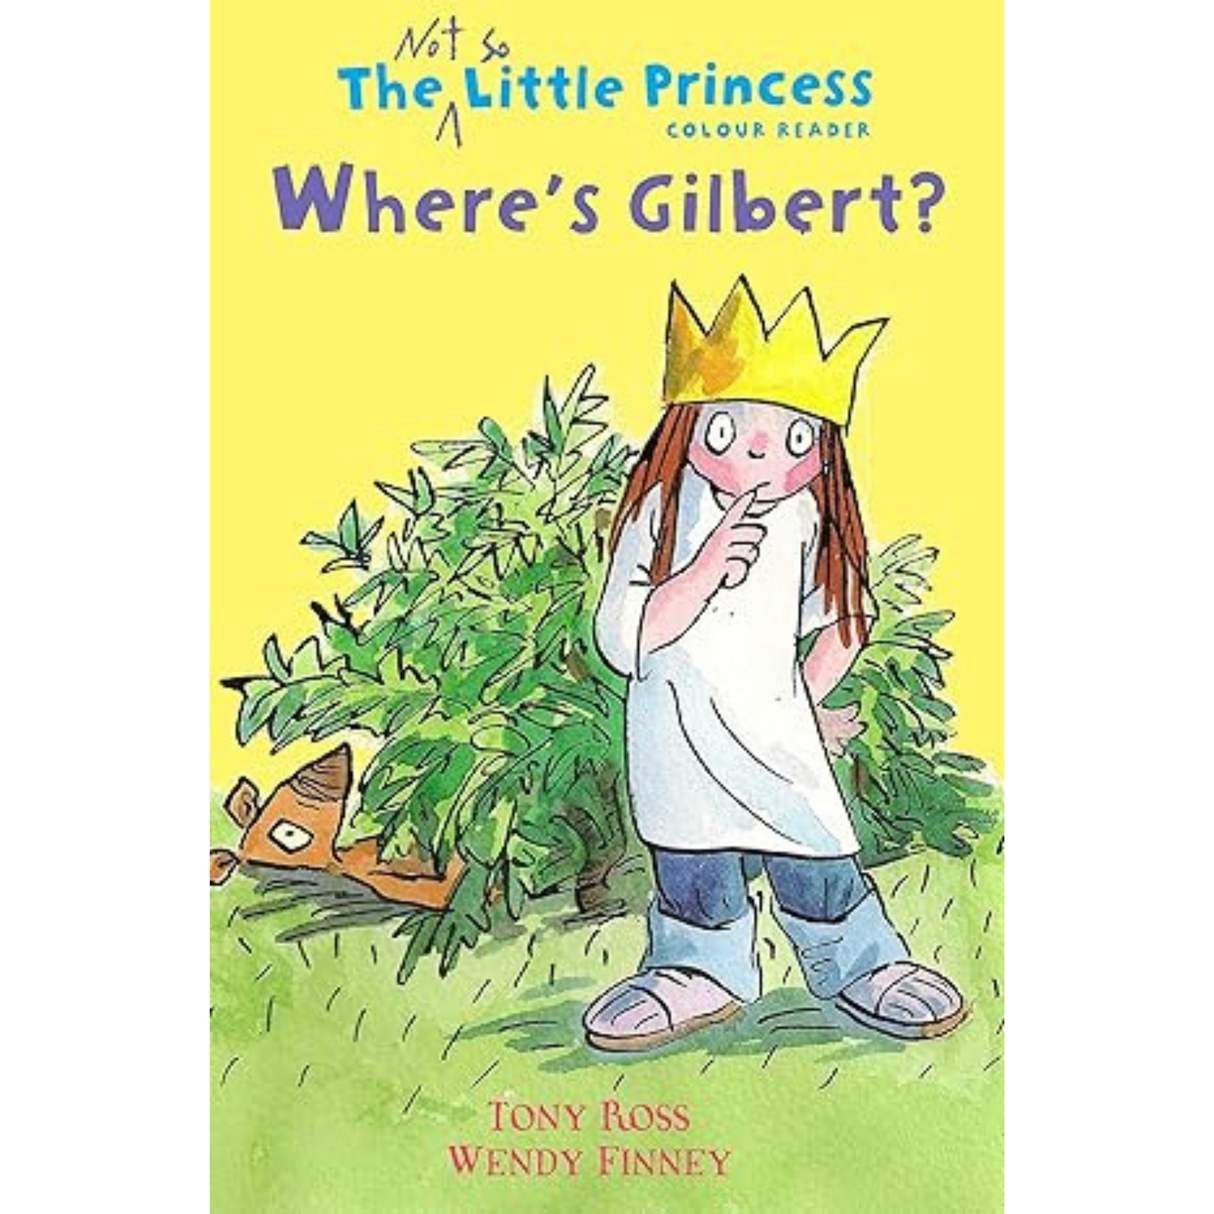 Where's Gilbert?: The Not So Little Princess Colour Reader Paperback – International Edition, October 7, 2015